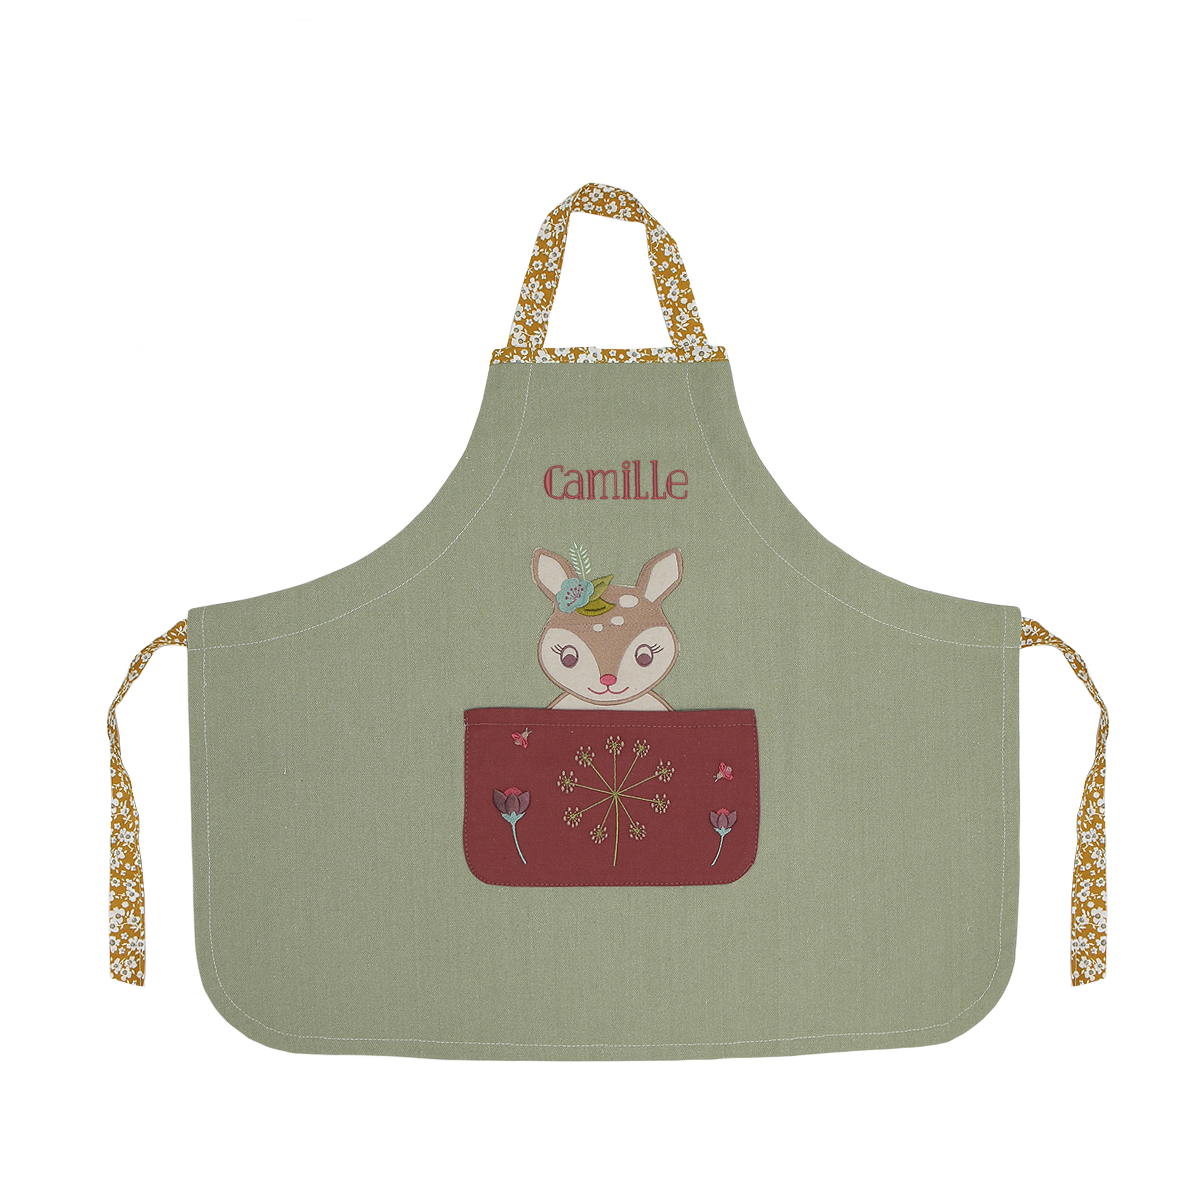 Personalized apron for children - Madame Faon